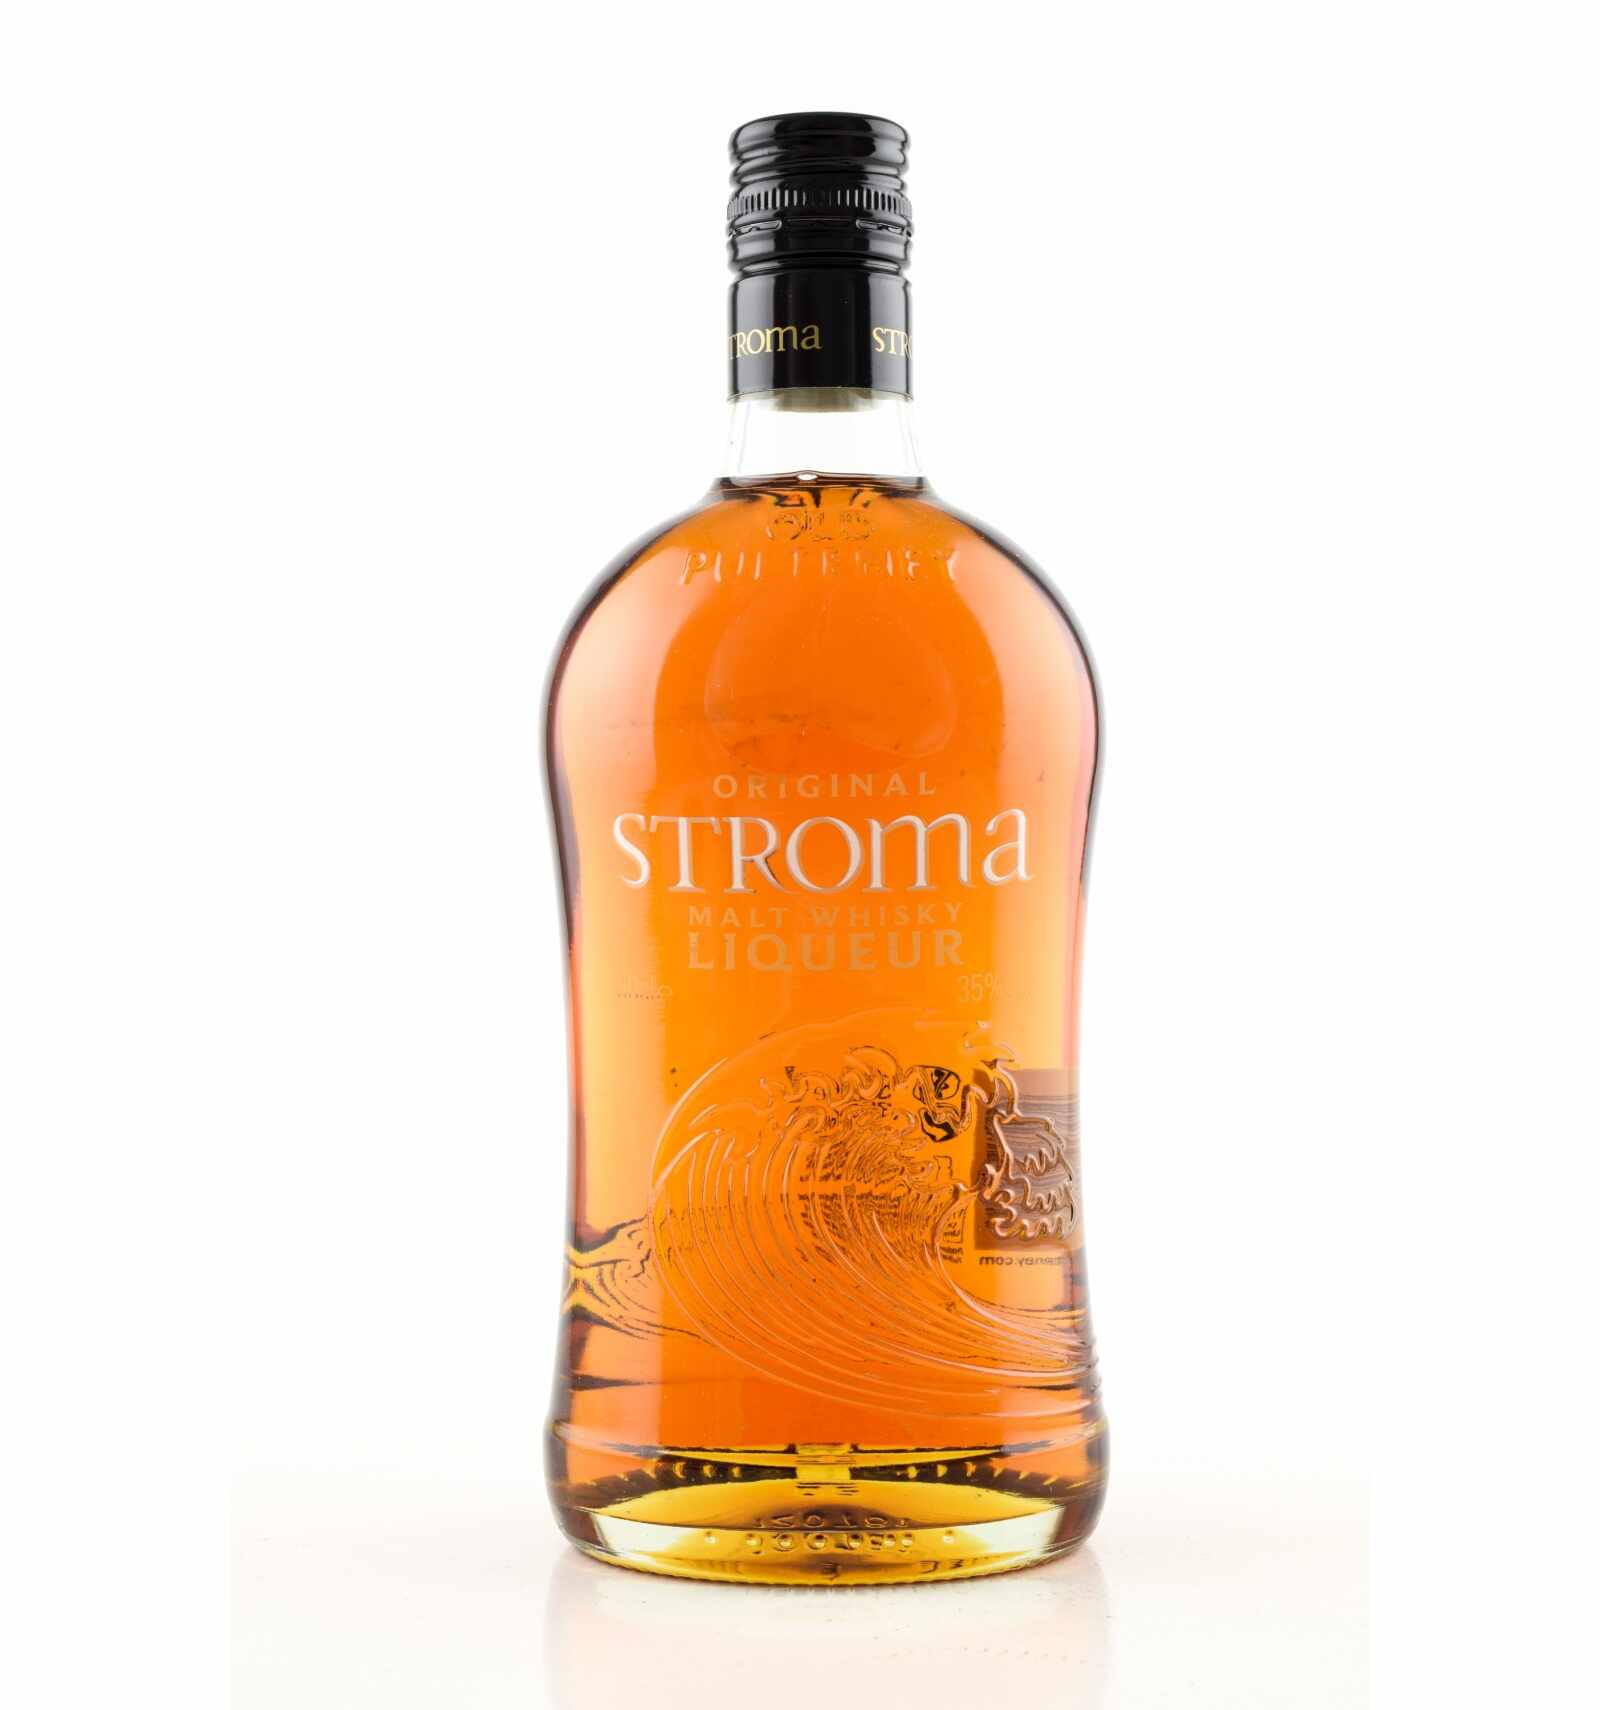 Whisky Old Pulteney Liqueur Stroma, 35% alc., 0.5L, Scotia